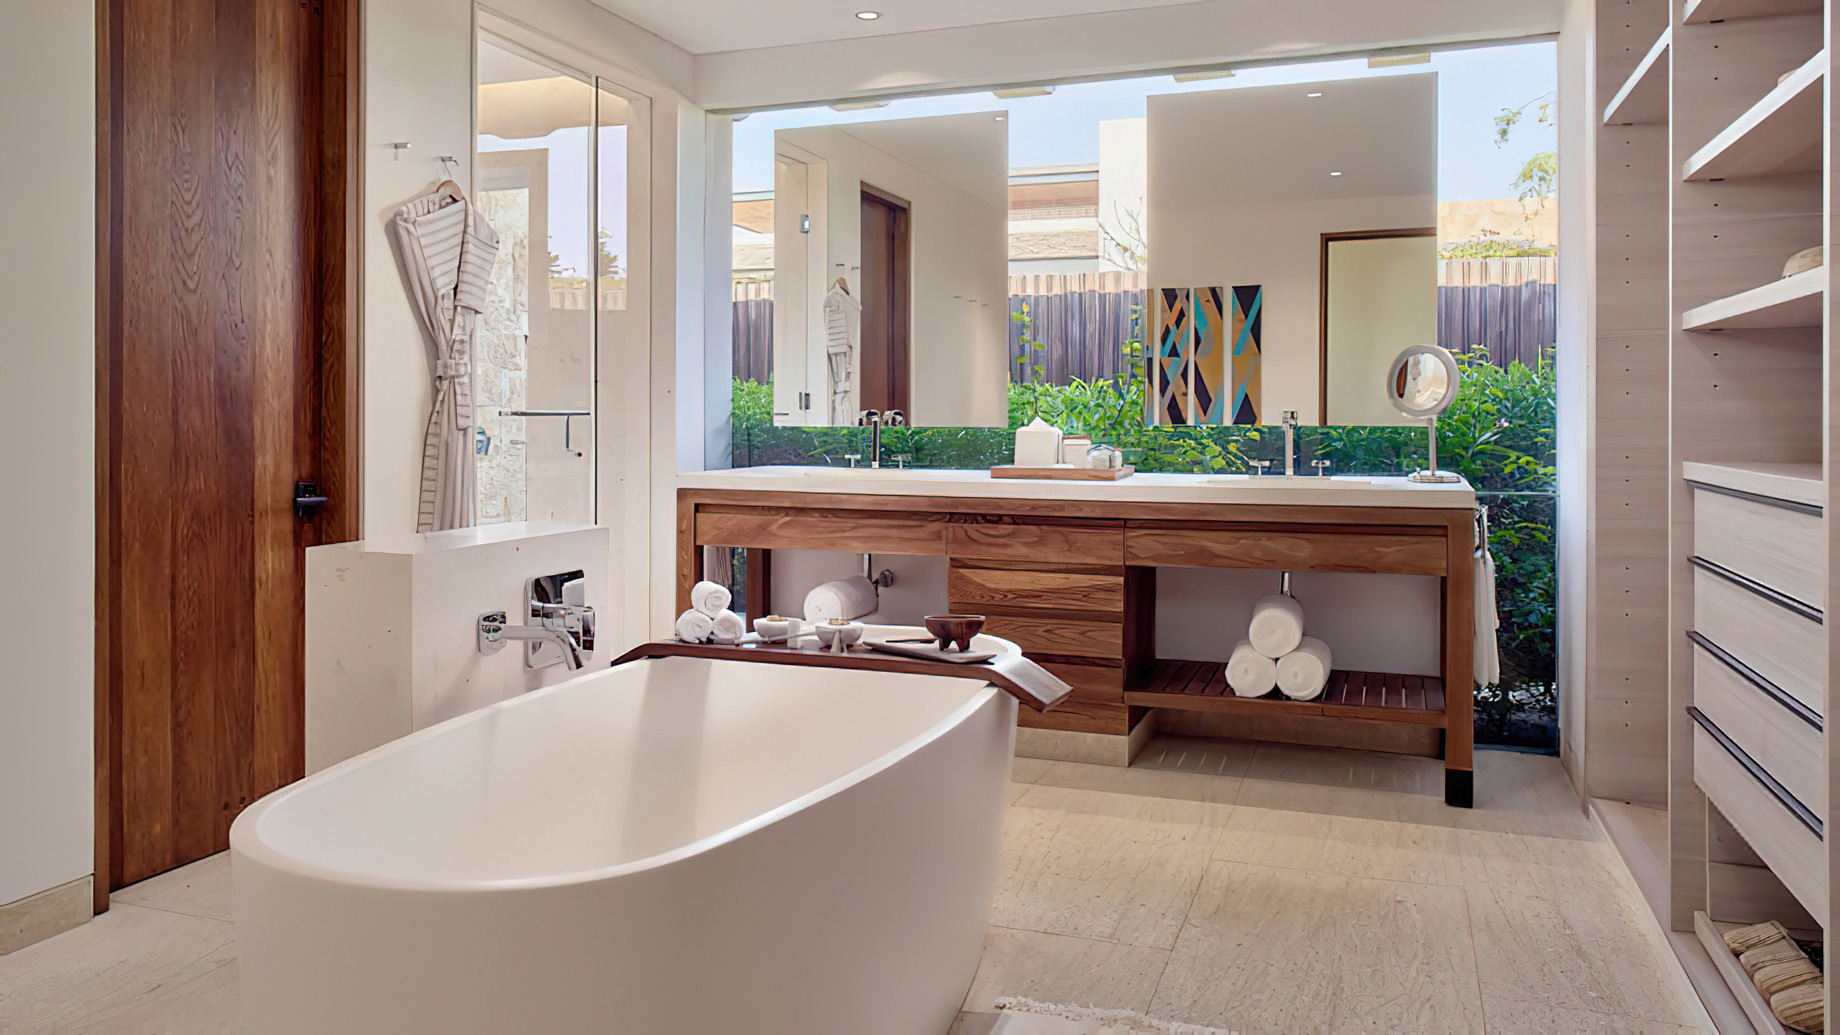 The Ritz-Carlton, Zadun Reserve Resort - Los Cabos, Mexico - 5 Bedroom Residence Bathroom